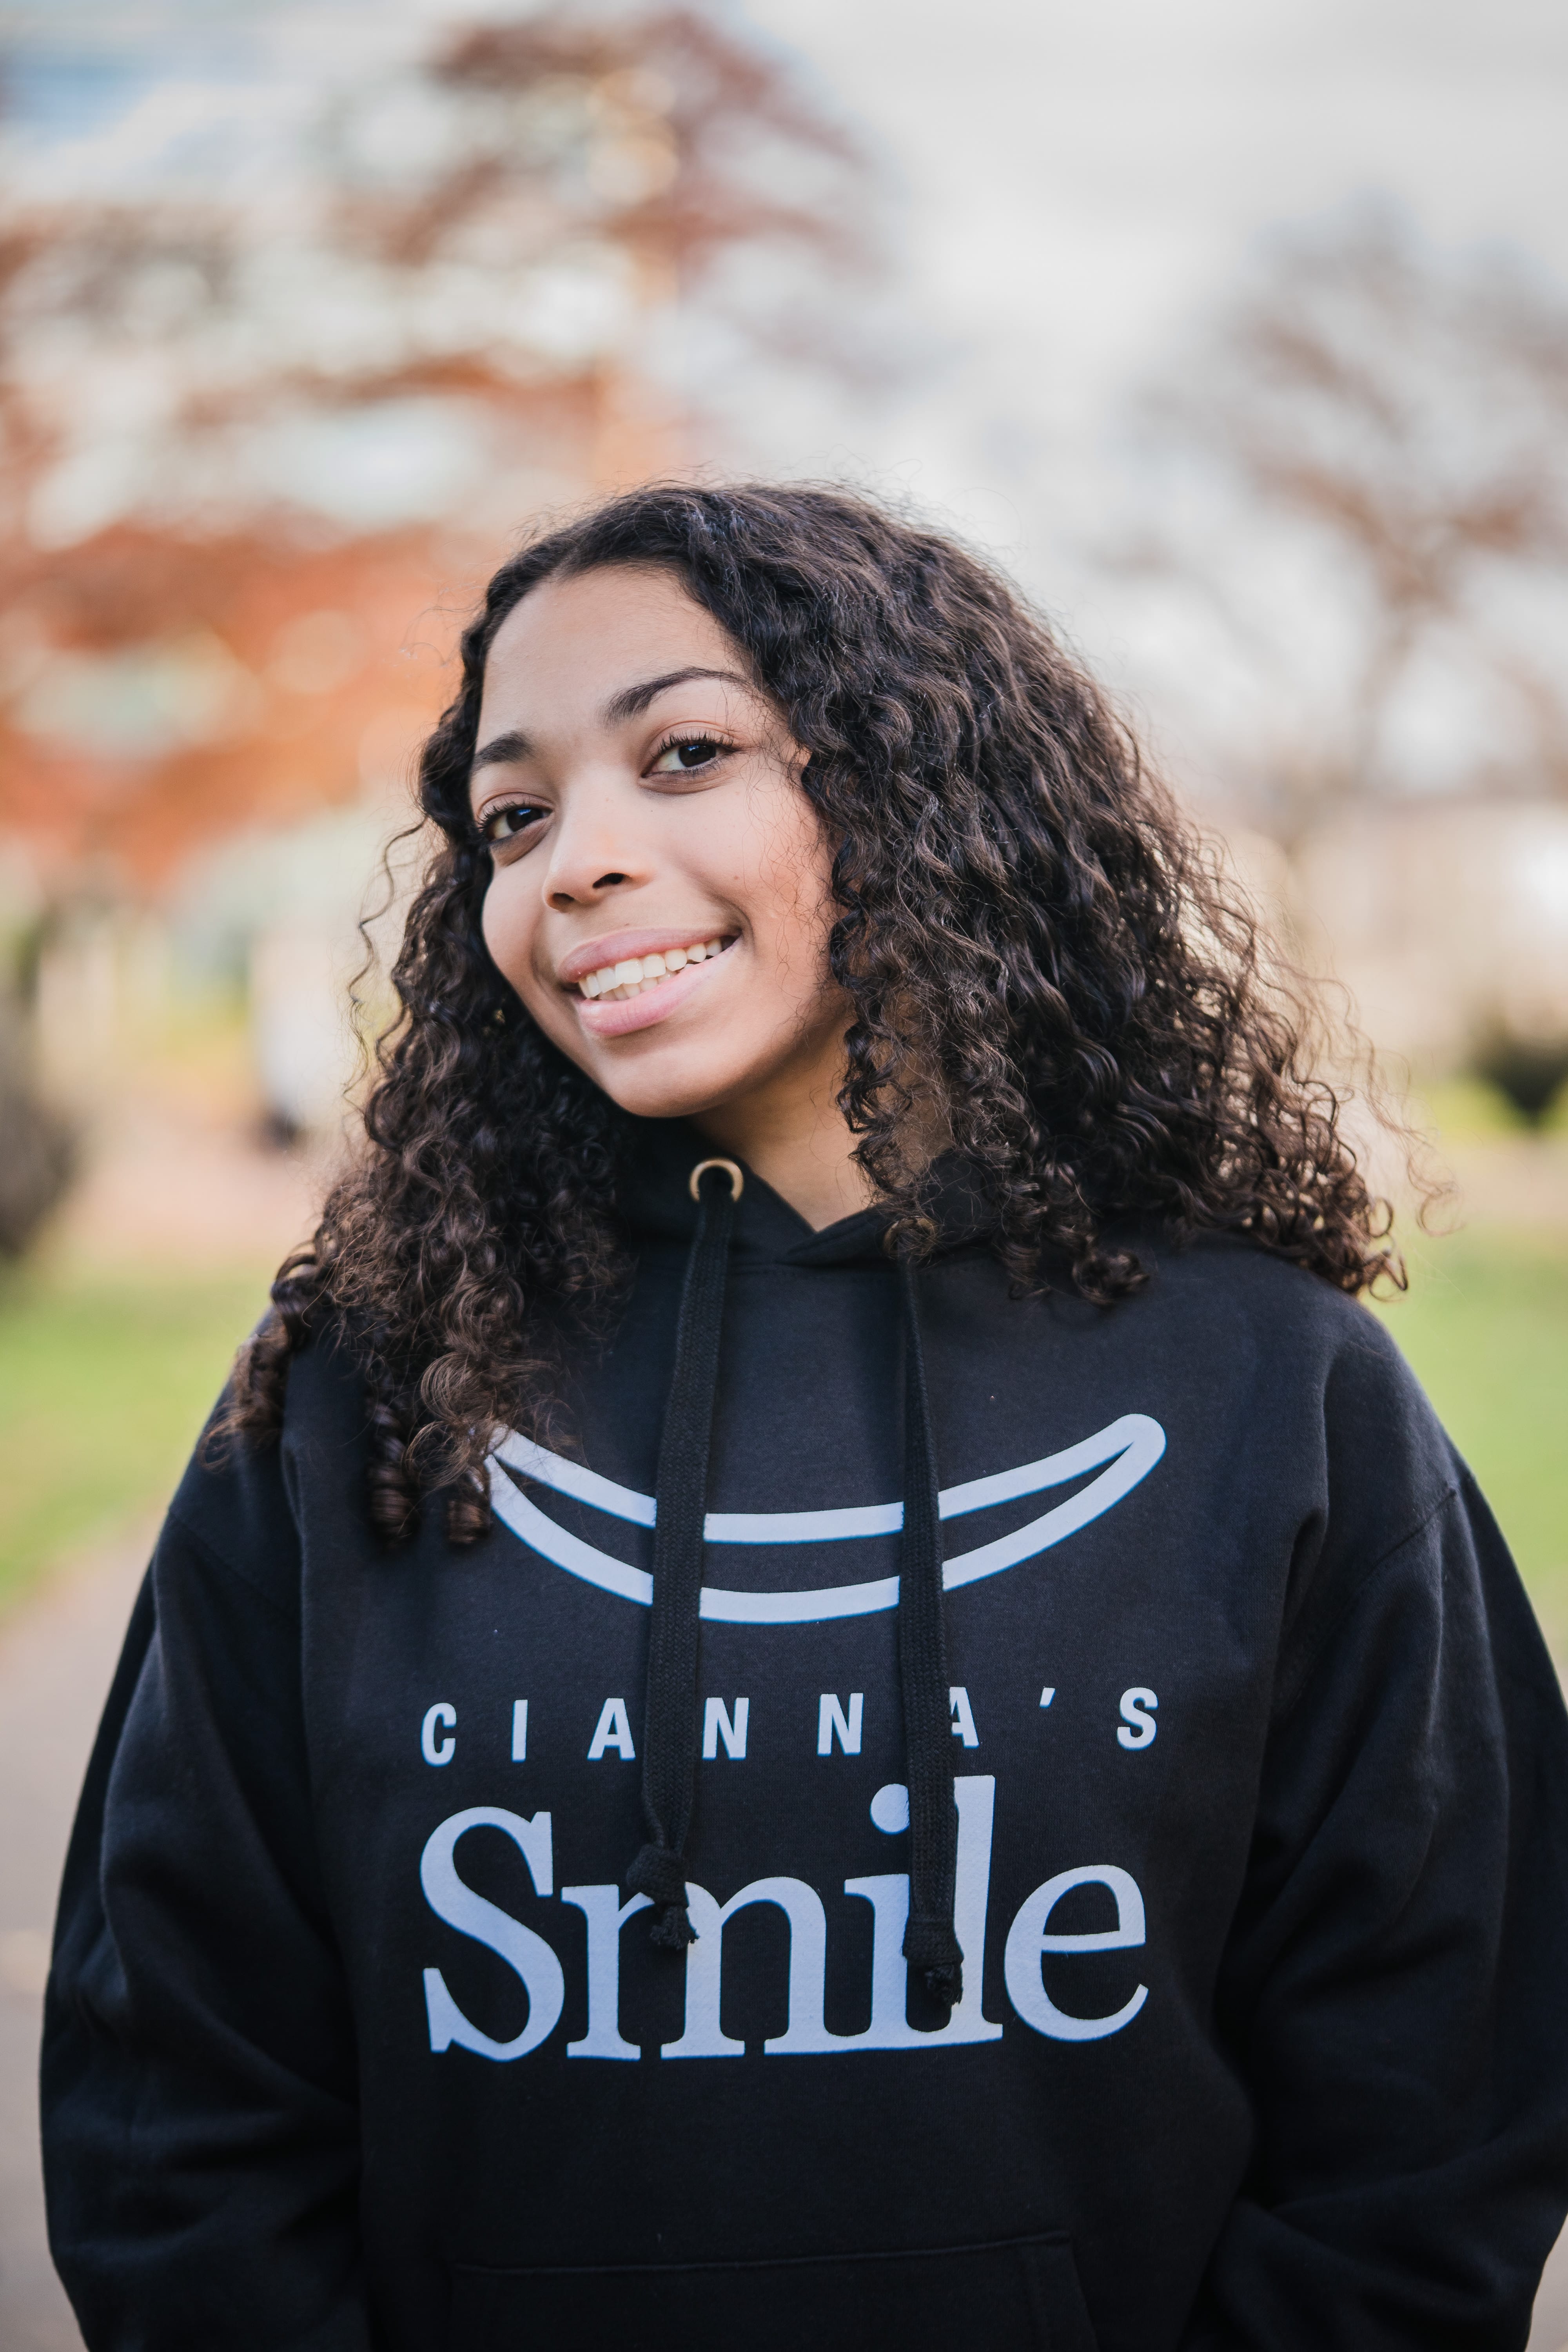 Cianna smiling